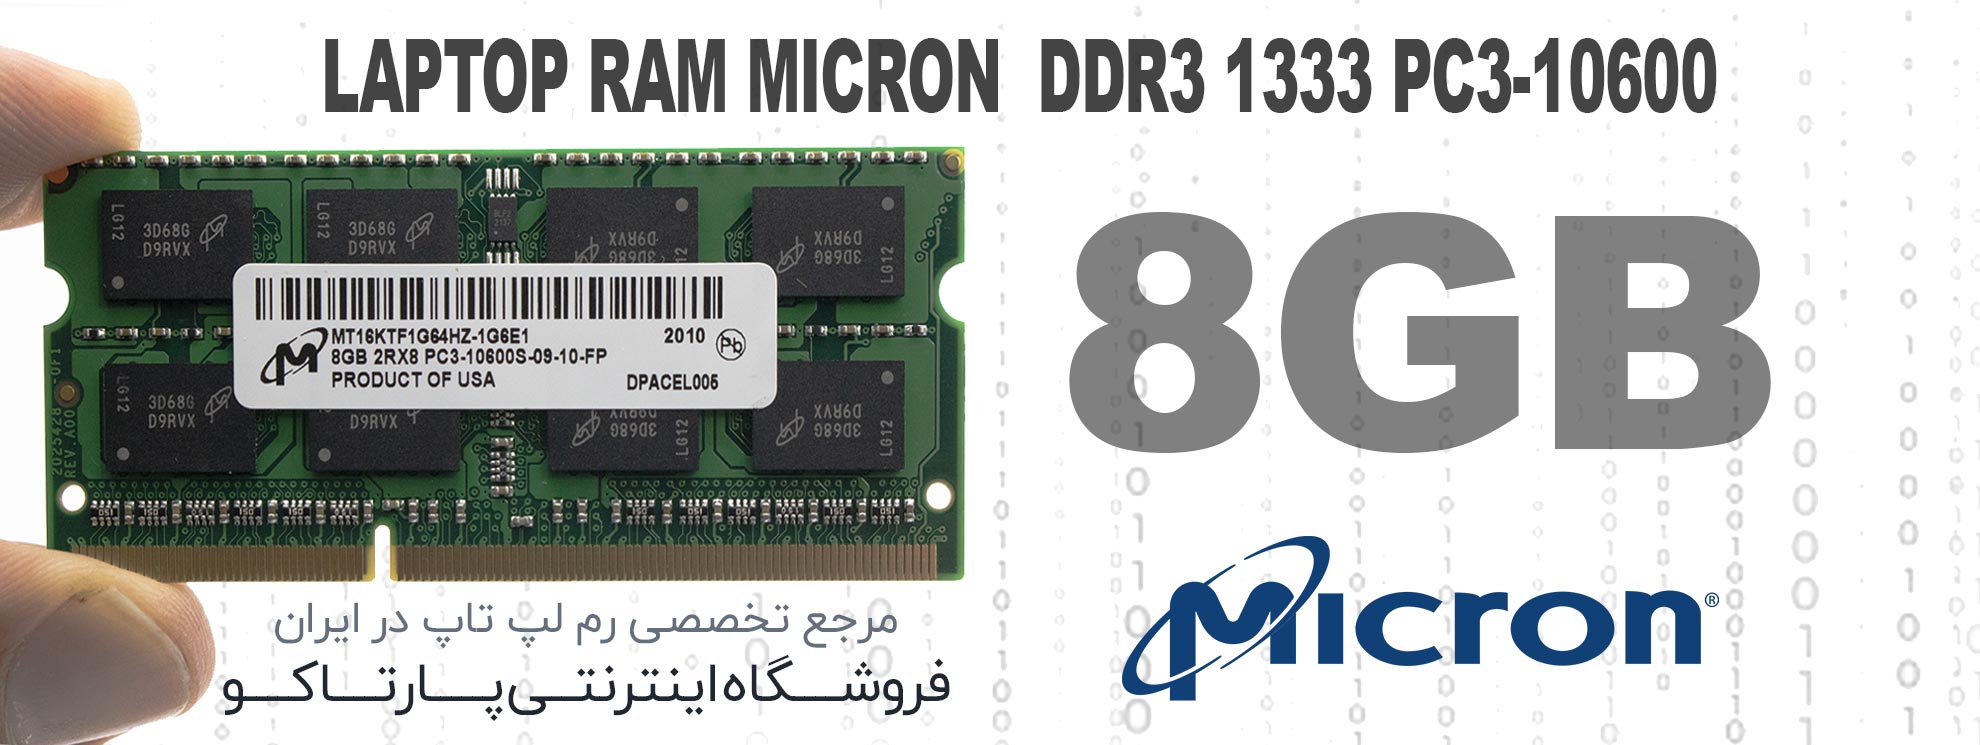 ram-micron-pc3-10600-ddr3-1333-PARTAKO